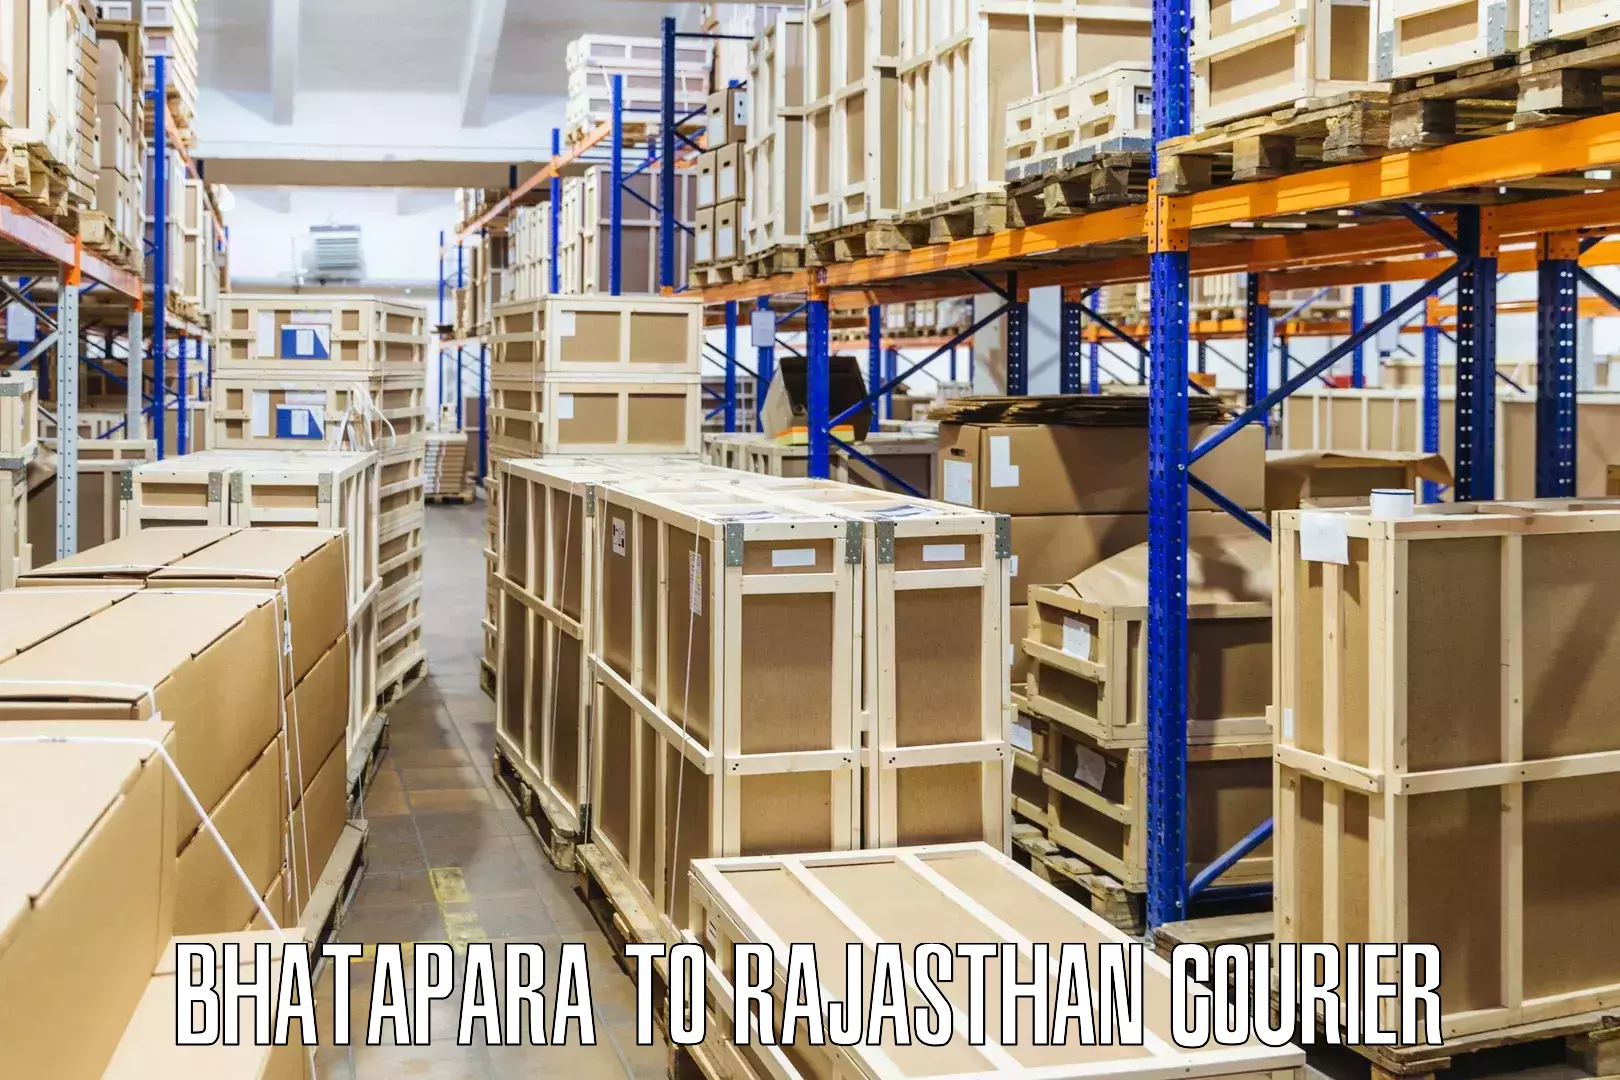 Expedited shipping solutions Bhatapara to Dungarpur